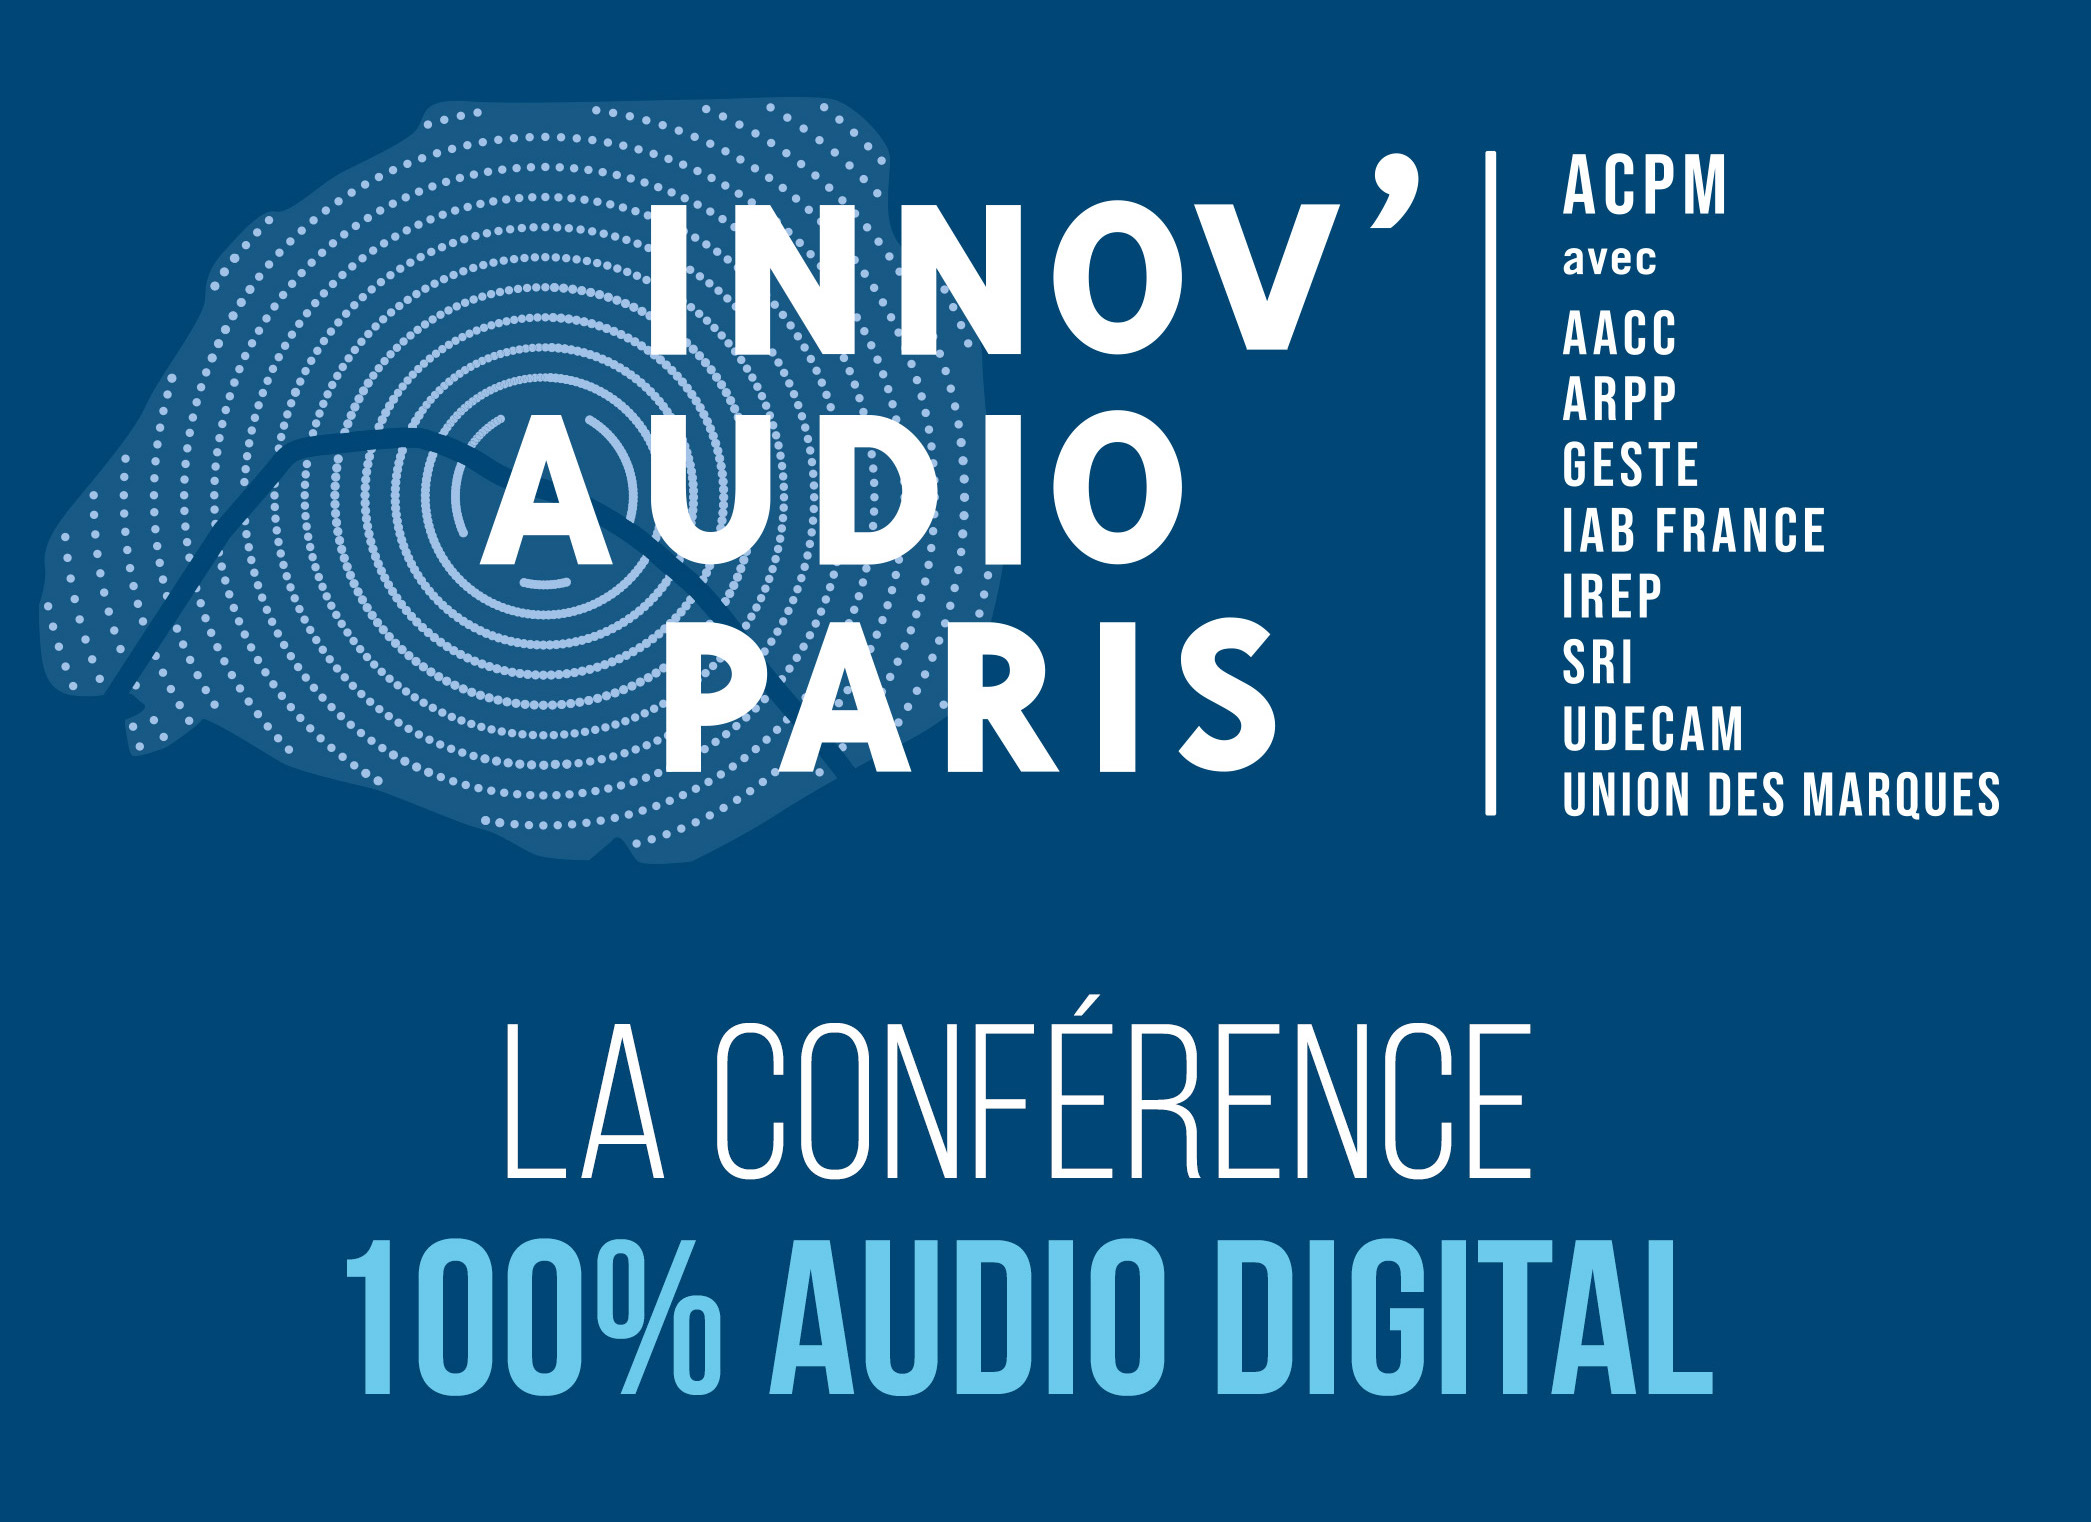 Innov'Audio Paris : le 20 novembre, à la Maison de la radio 